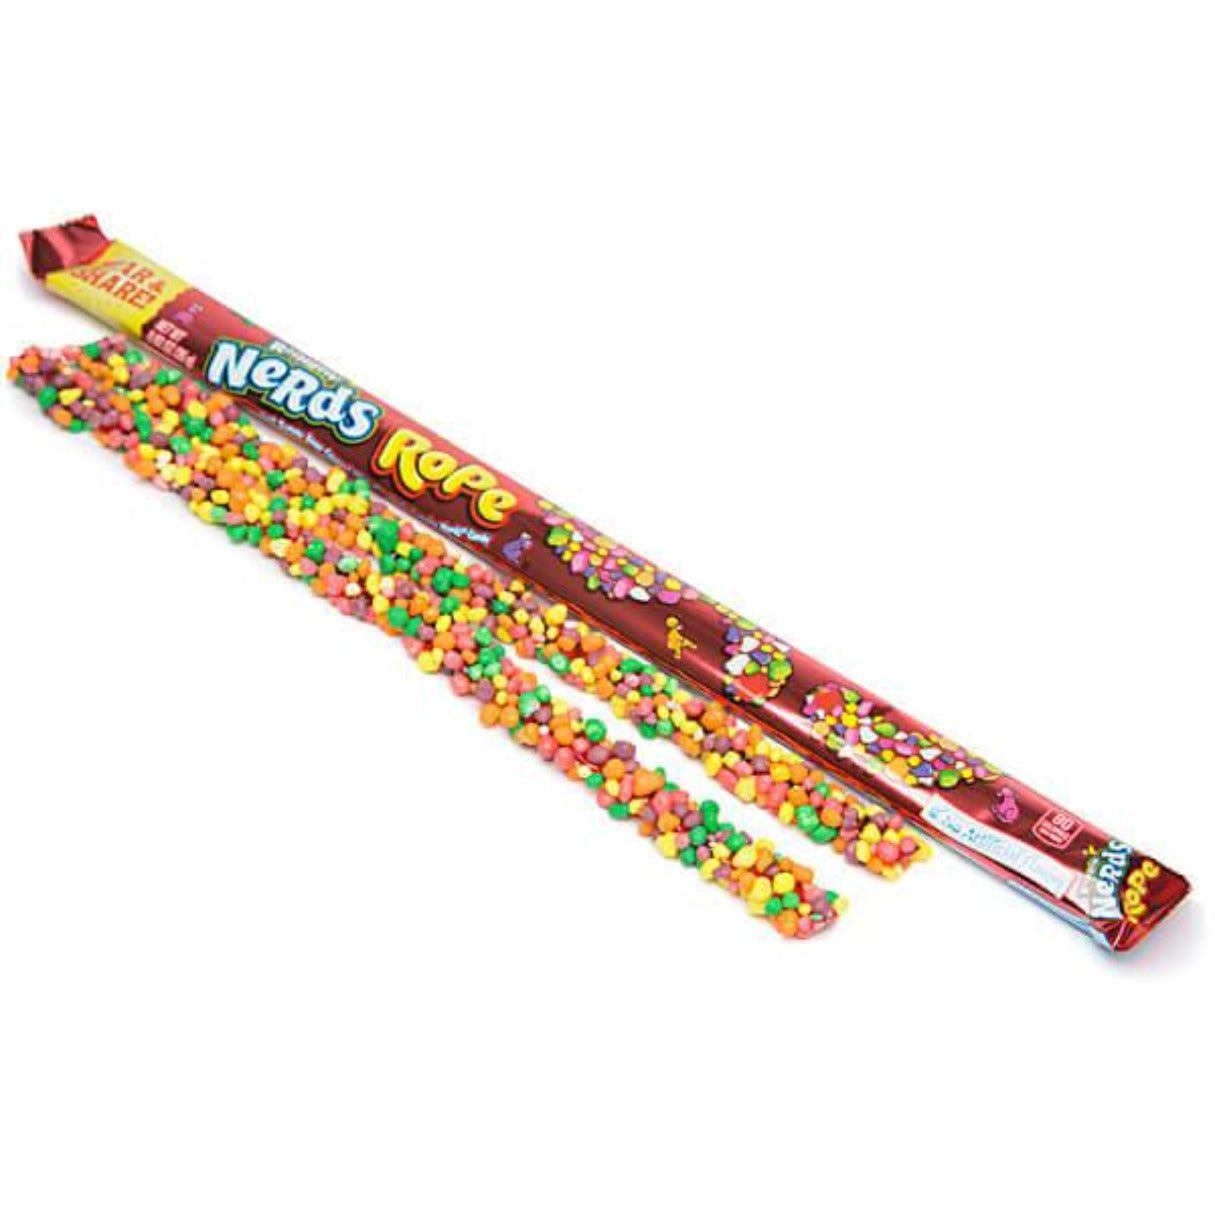 Nerds Candy, Original, Rainbow, 5 Ounce Box (Pack of 12)